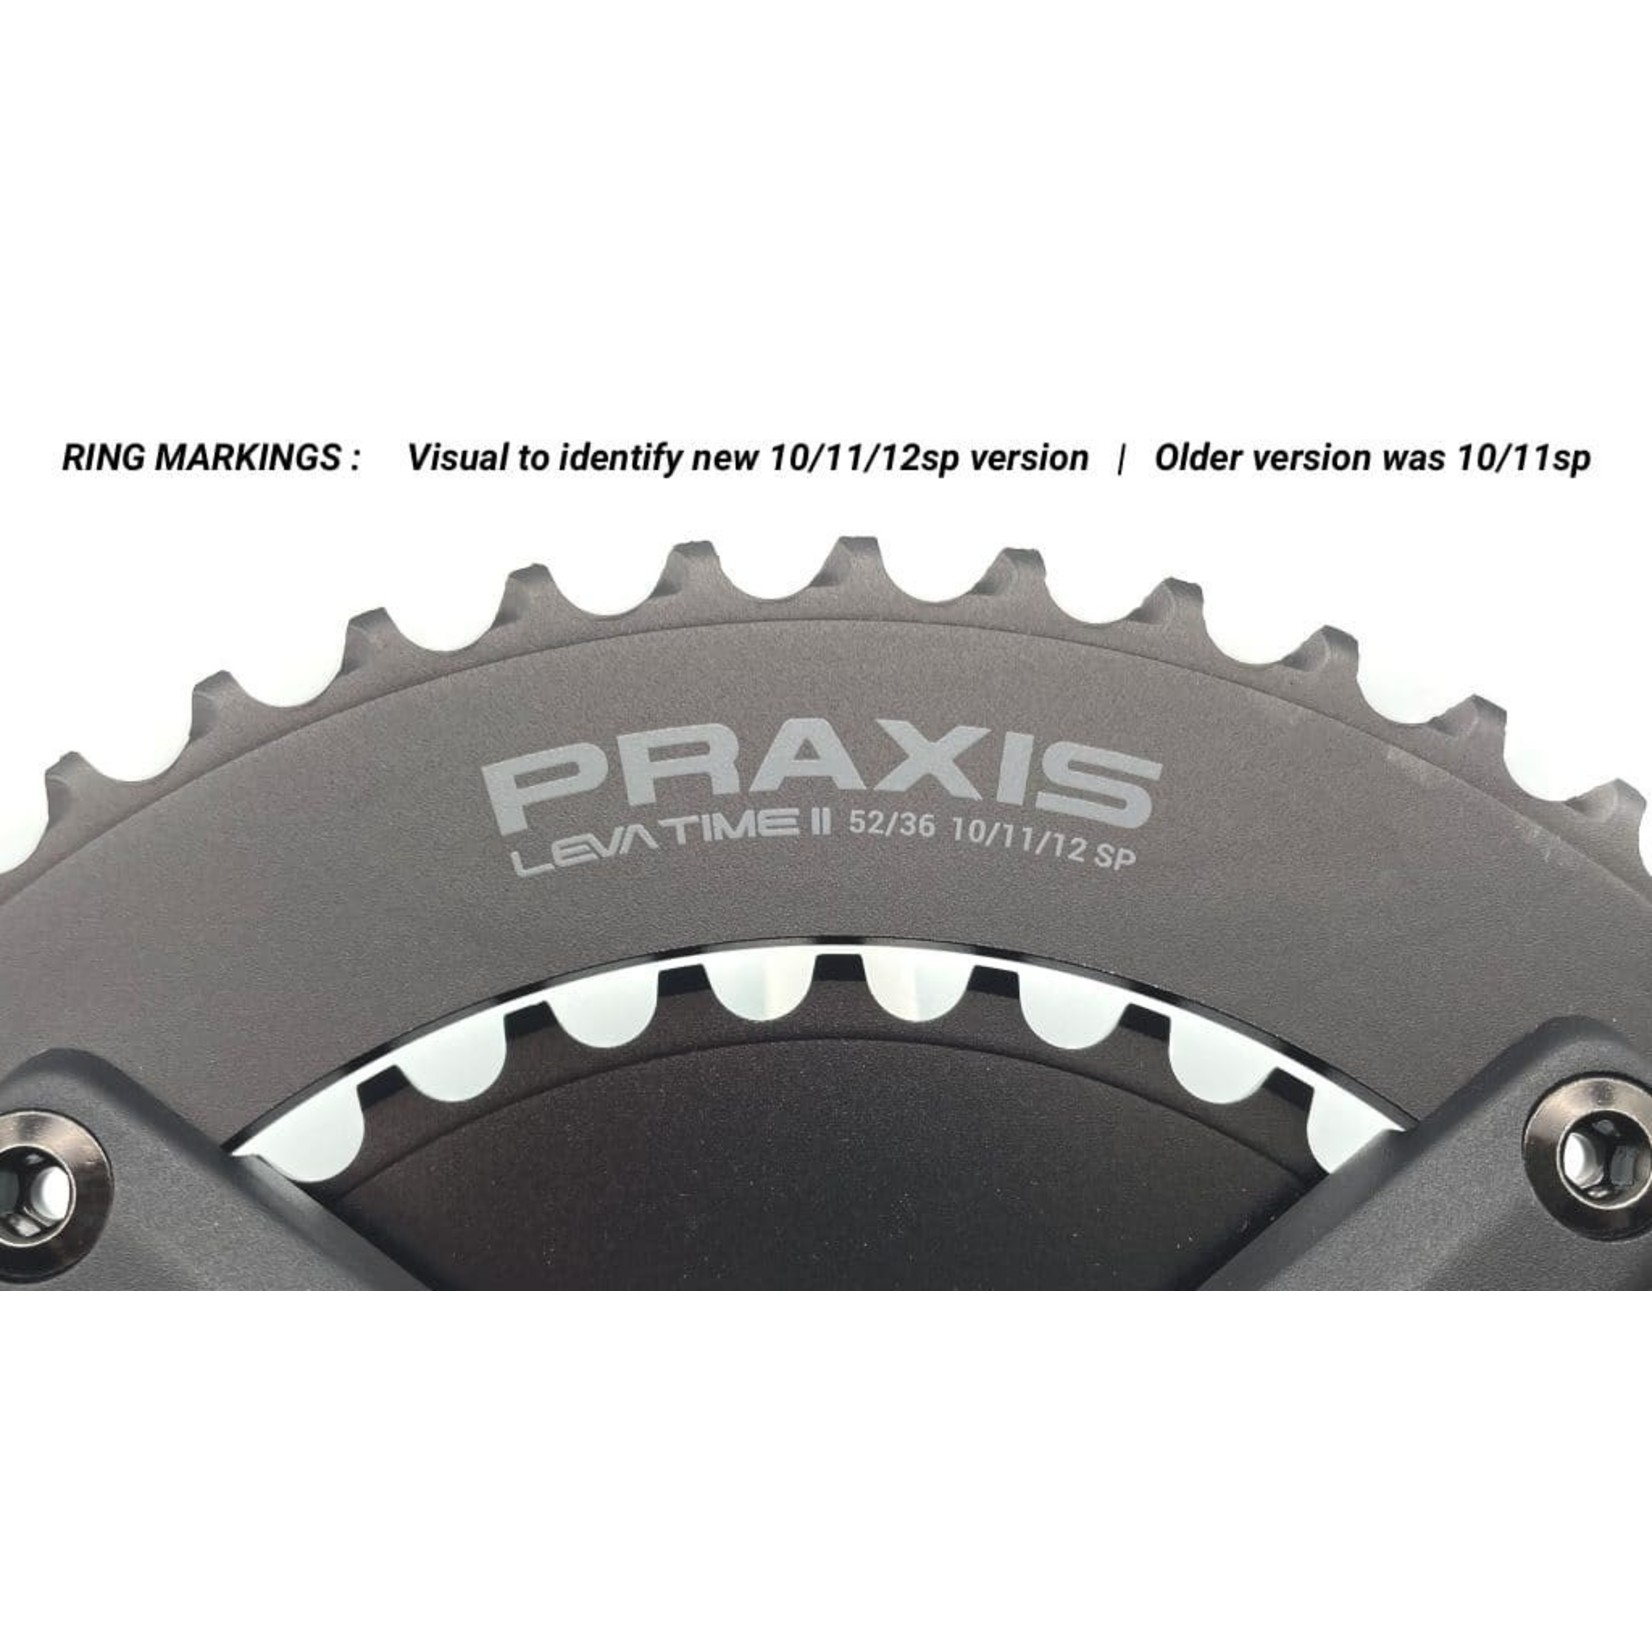 Praxis Praxis Road cranks - Alba - Alloy,172.5mm 48/32